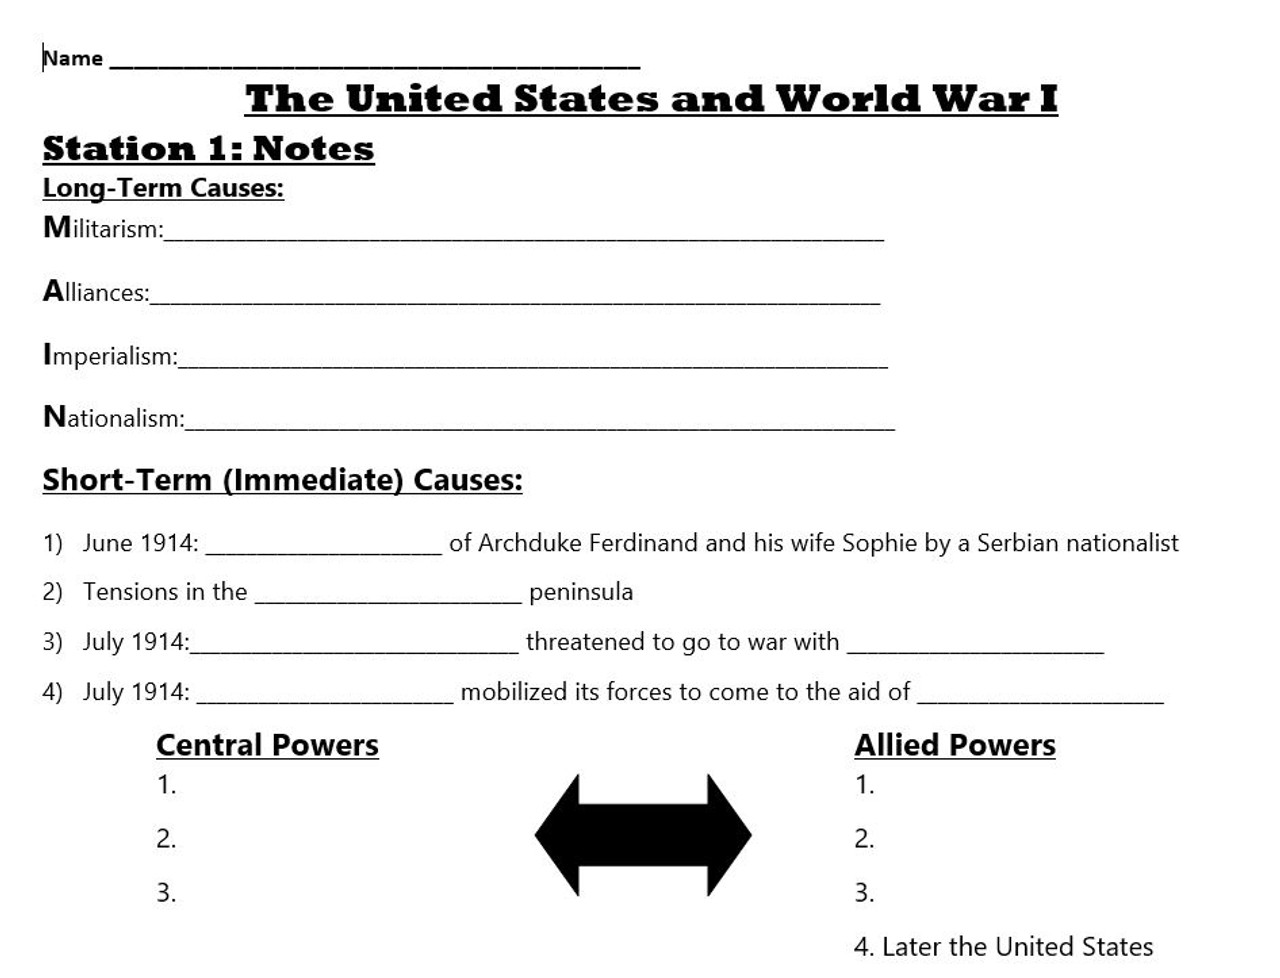 U.S. During World War I Stations Lesson 